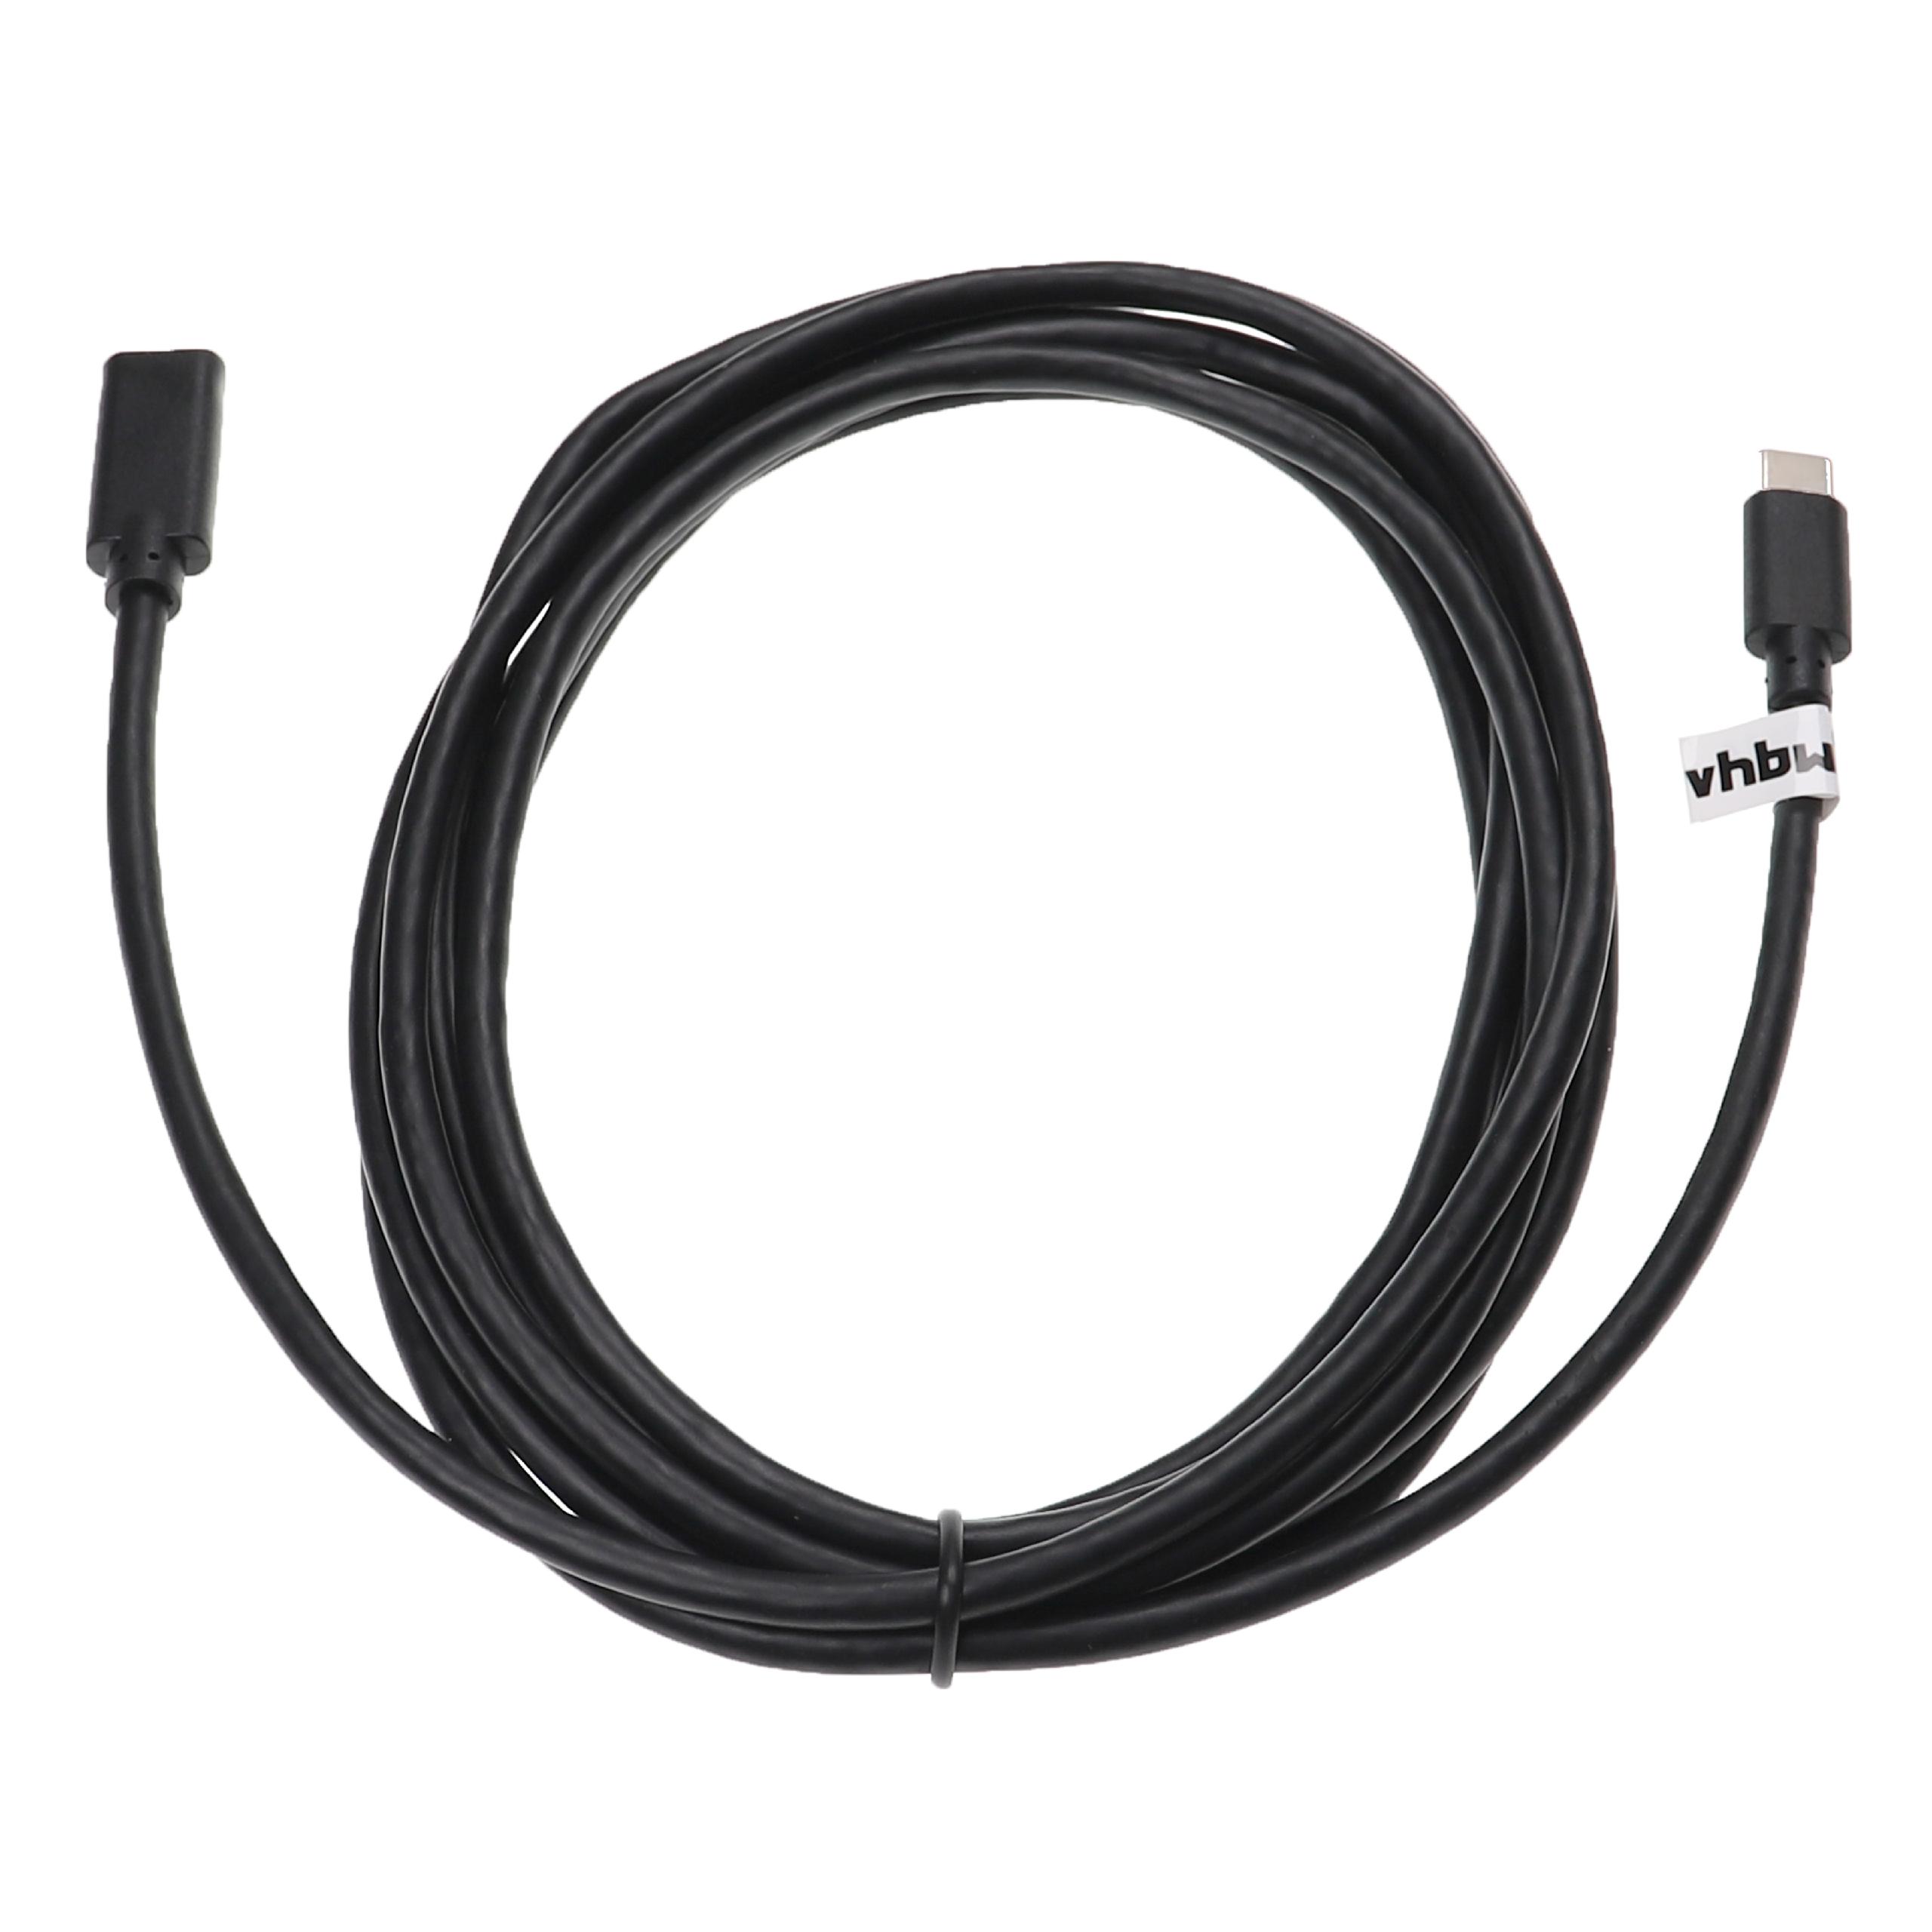 Cable alargador USB-C para diversas tablets, notebooks - 3 m negro, cable USB 3.1 C